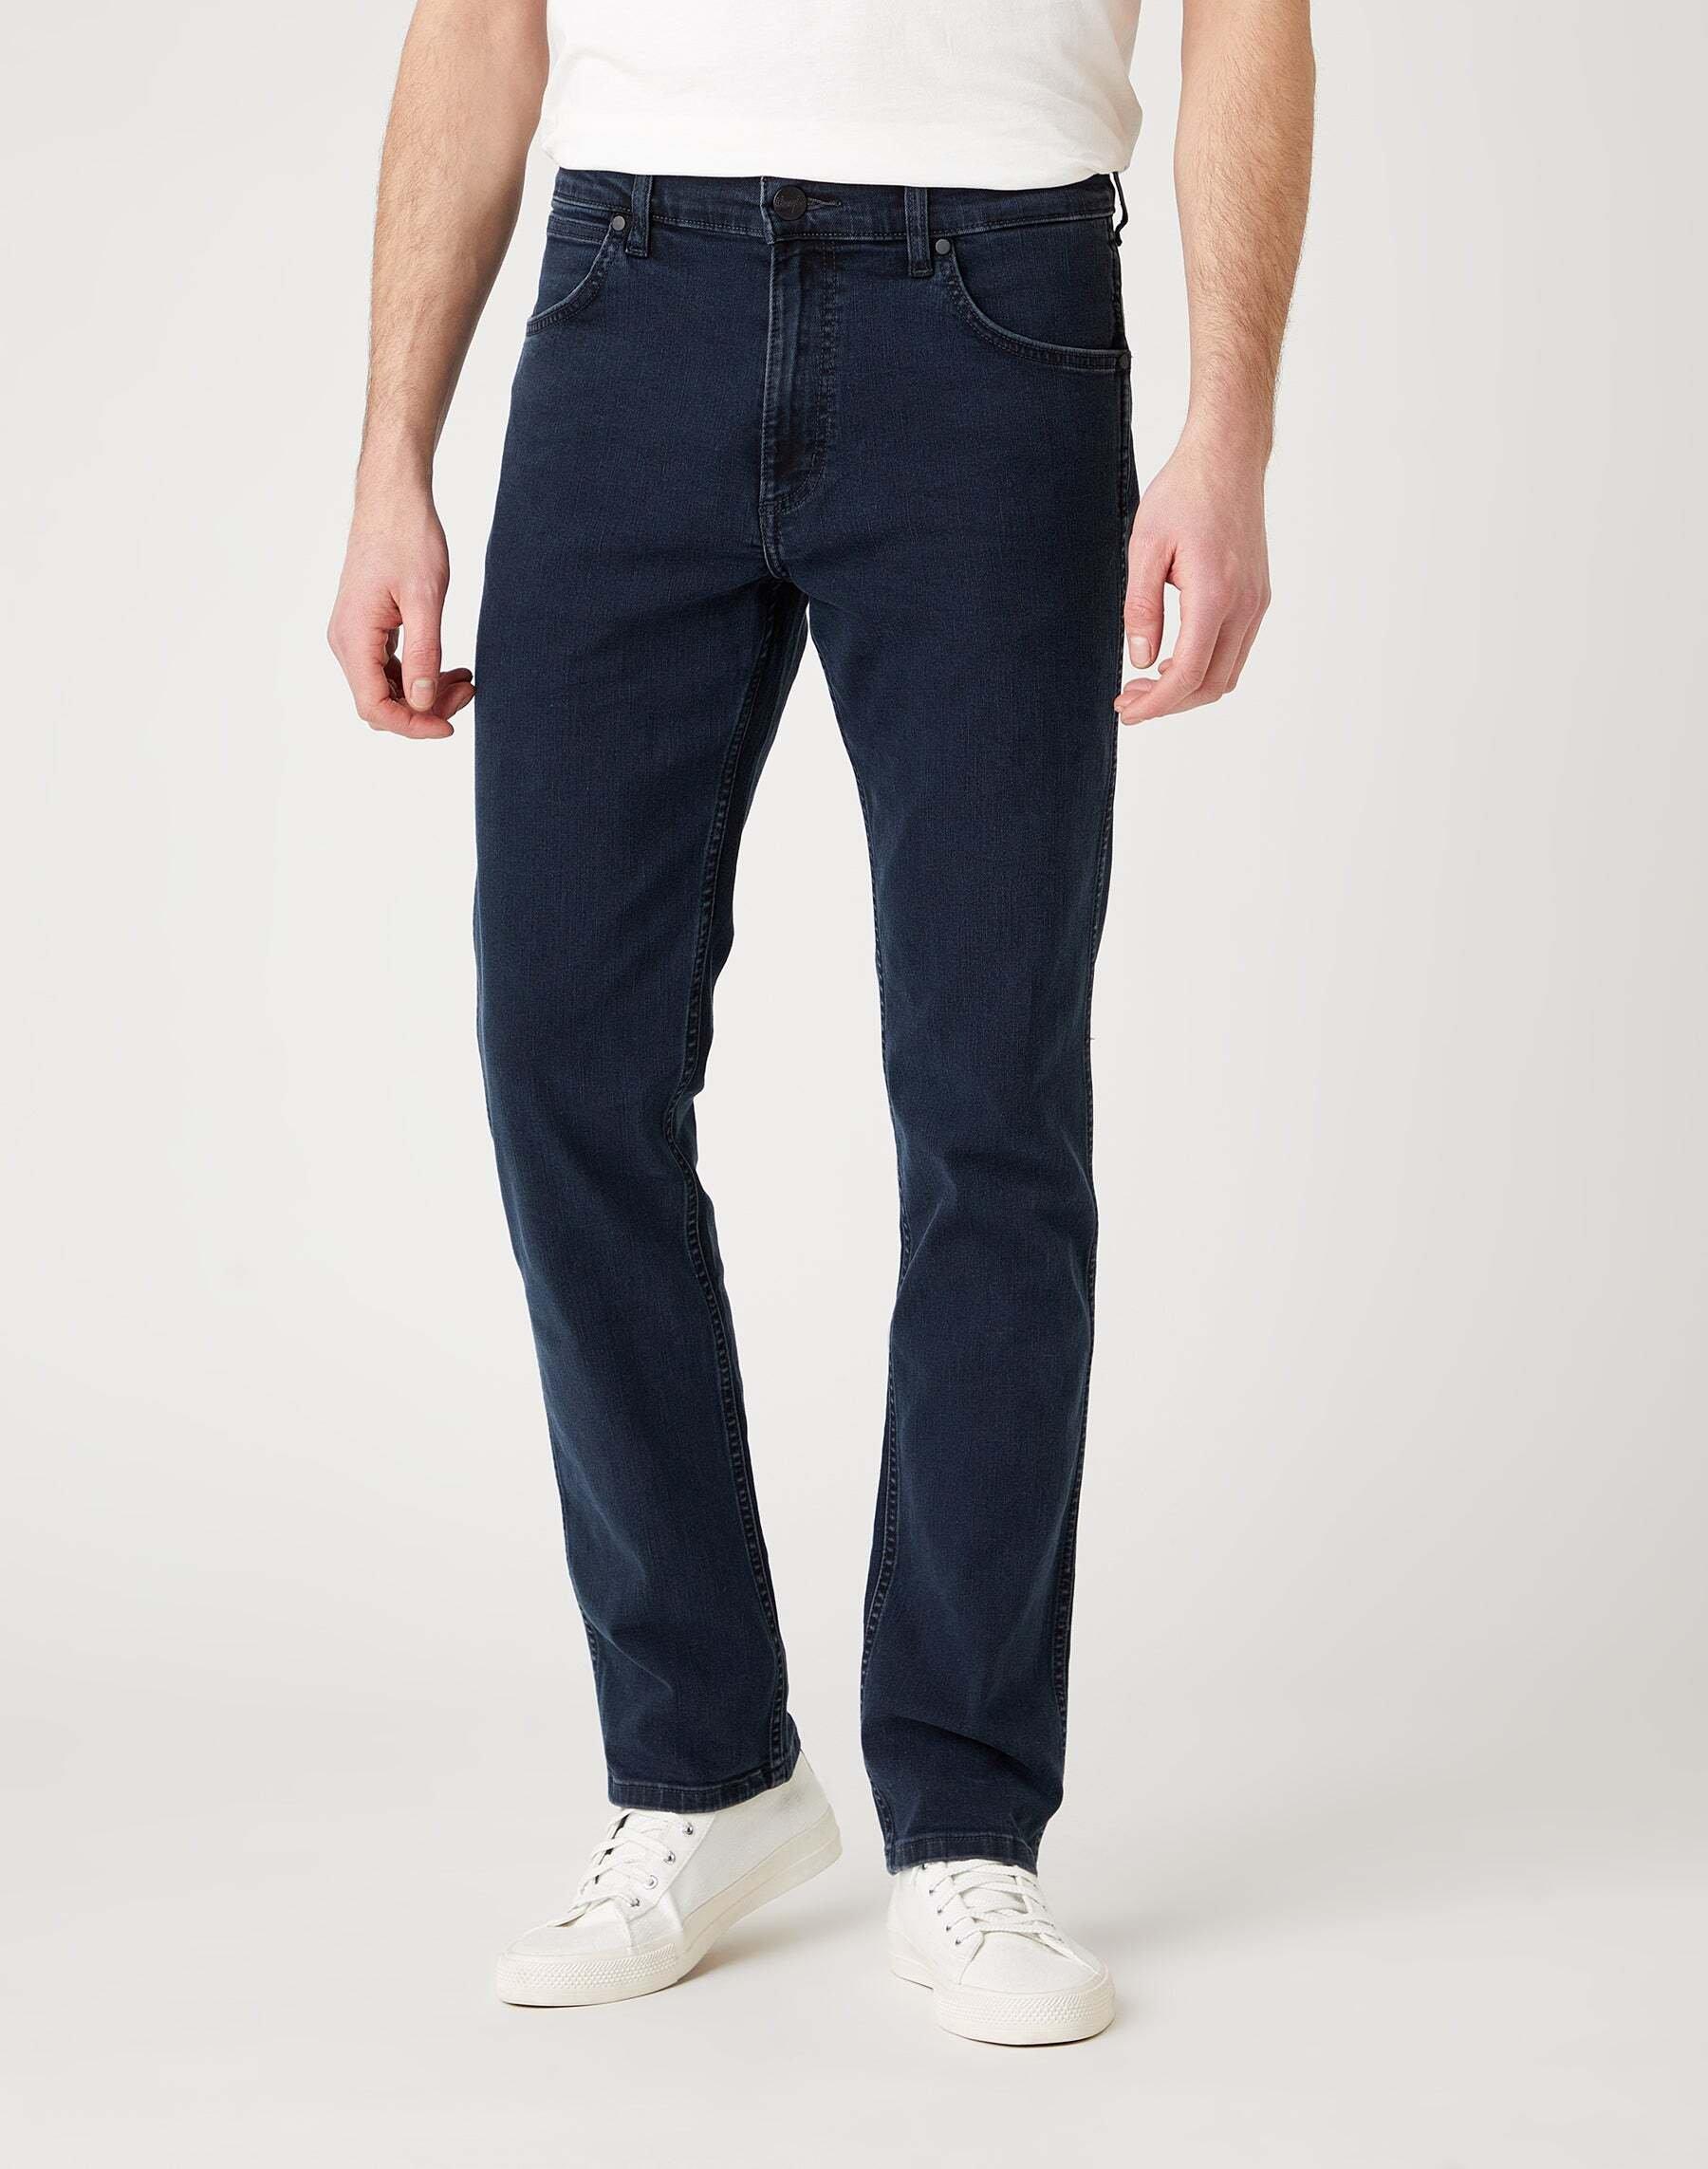 Jeans Straight Leg Greensboro Herren Blau Denim L32/W38 von Wrangler